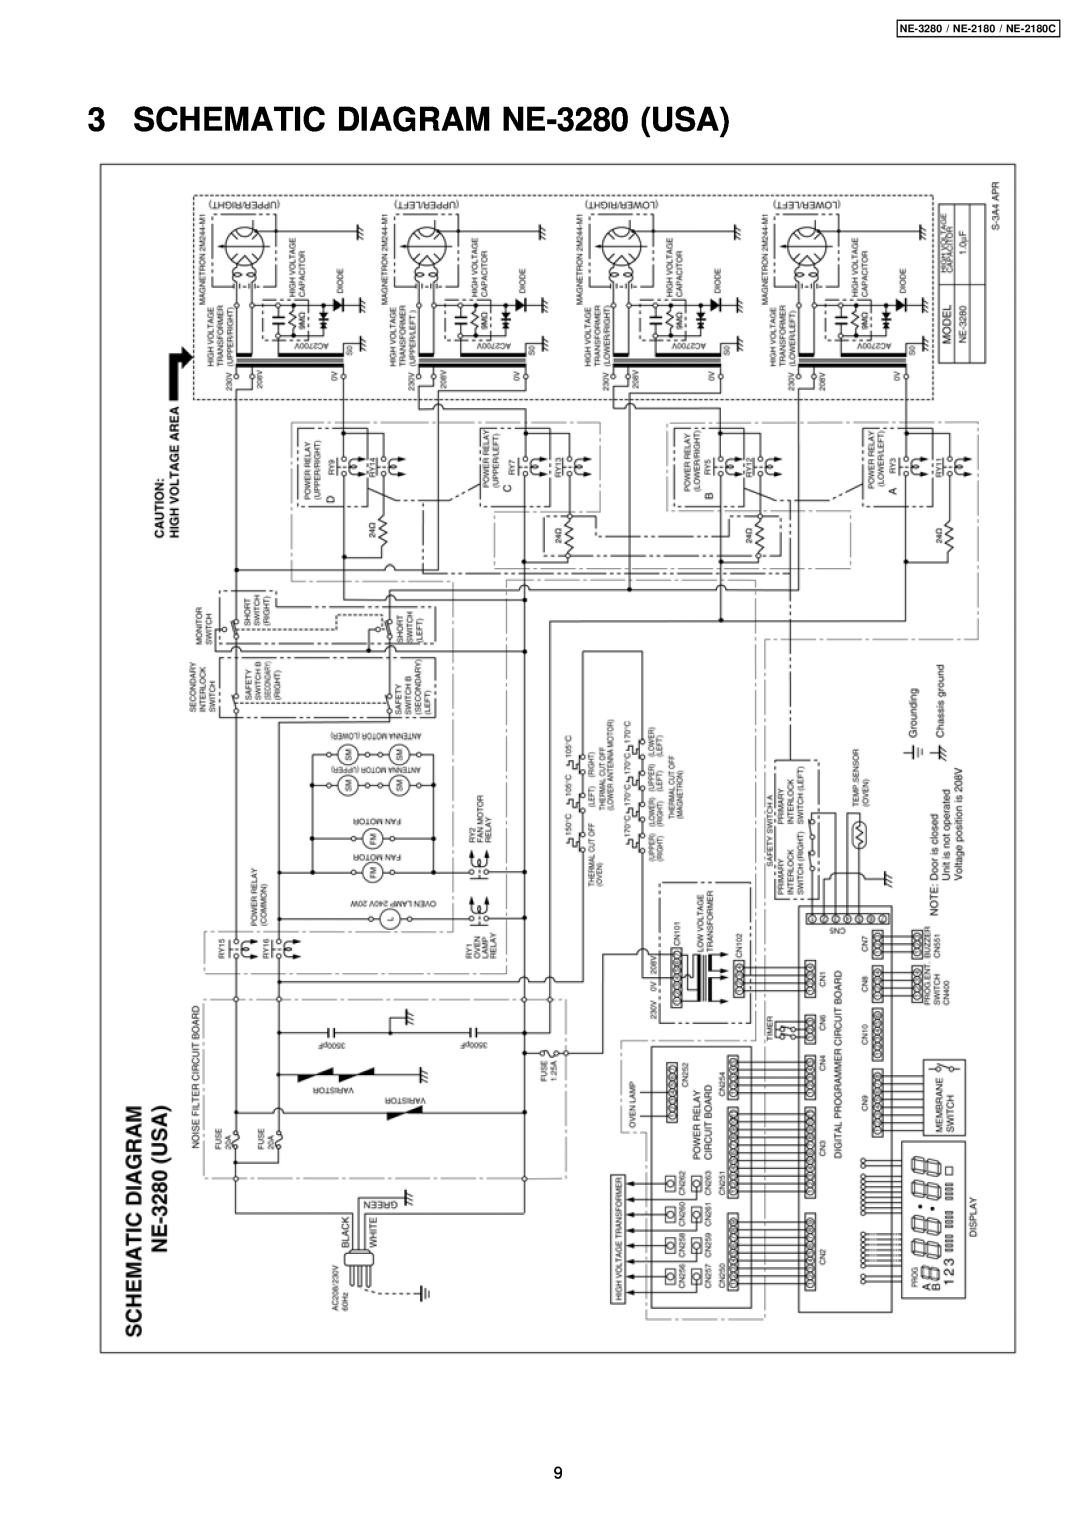 Panasonic manual SCHEMATIC DIAGRAM NE-3280USA, NE-3280 / NE-2180 / NE-2180C 